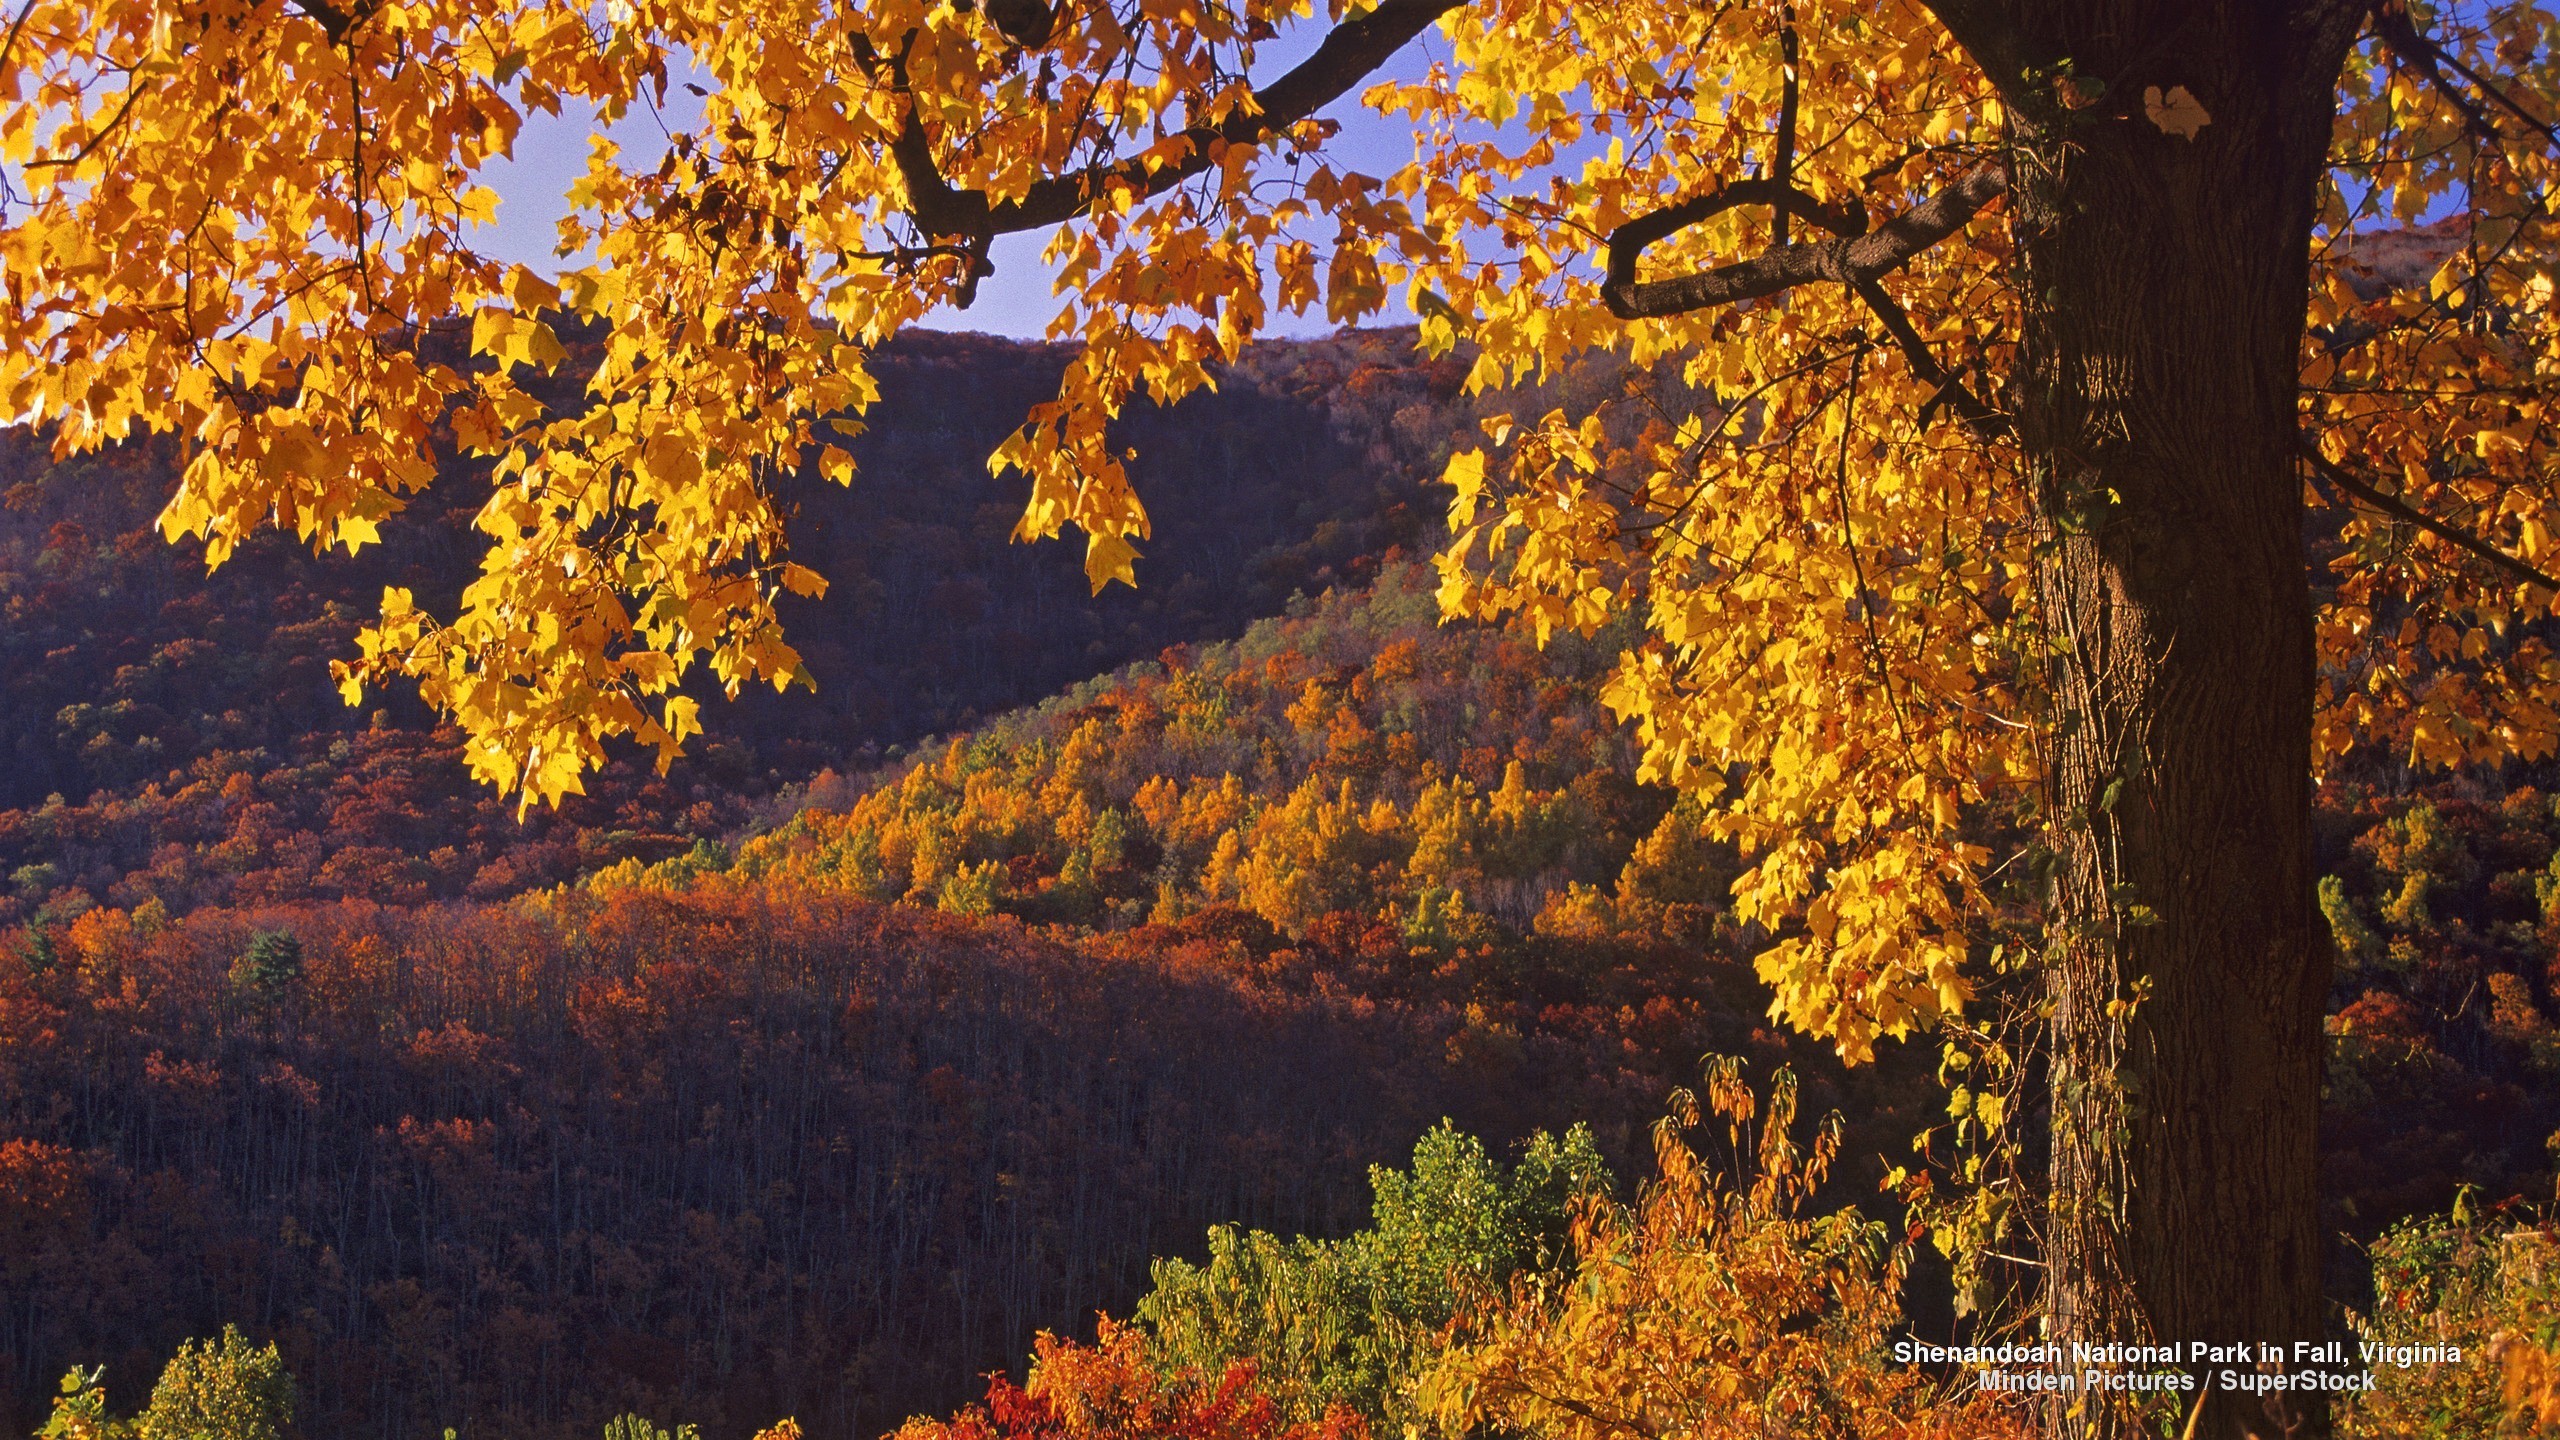 2560x1440 Shenandoah National Park in Virginia HD Wallpaper | Hintergrund |   | ID:863679 - Wallpaper Abyss